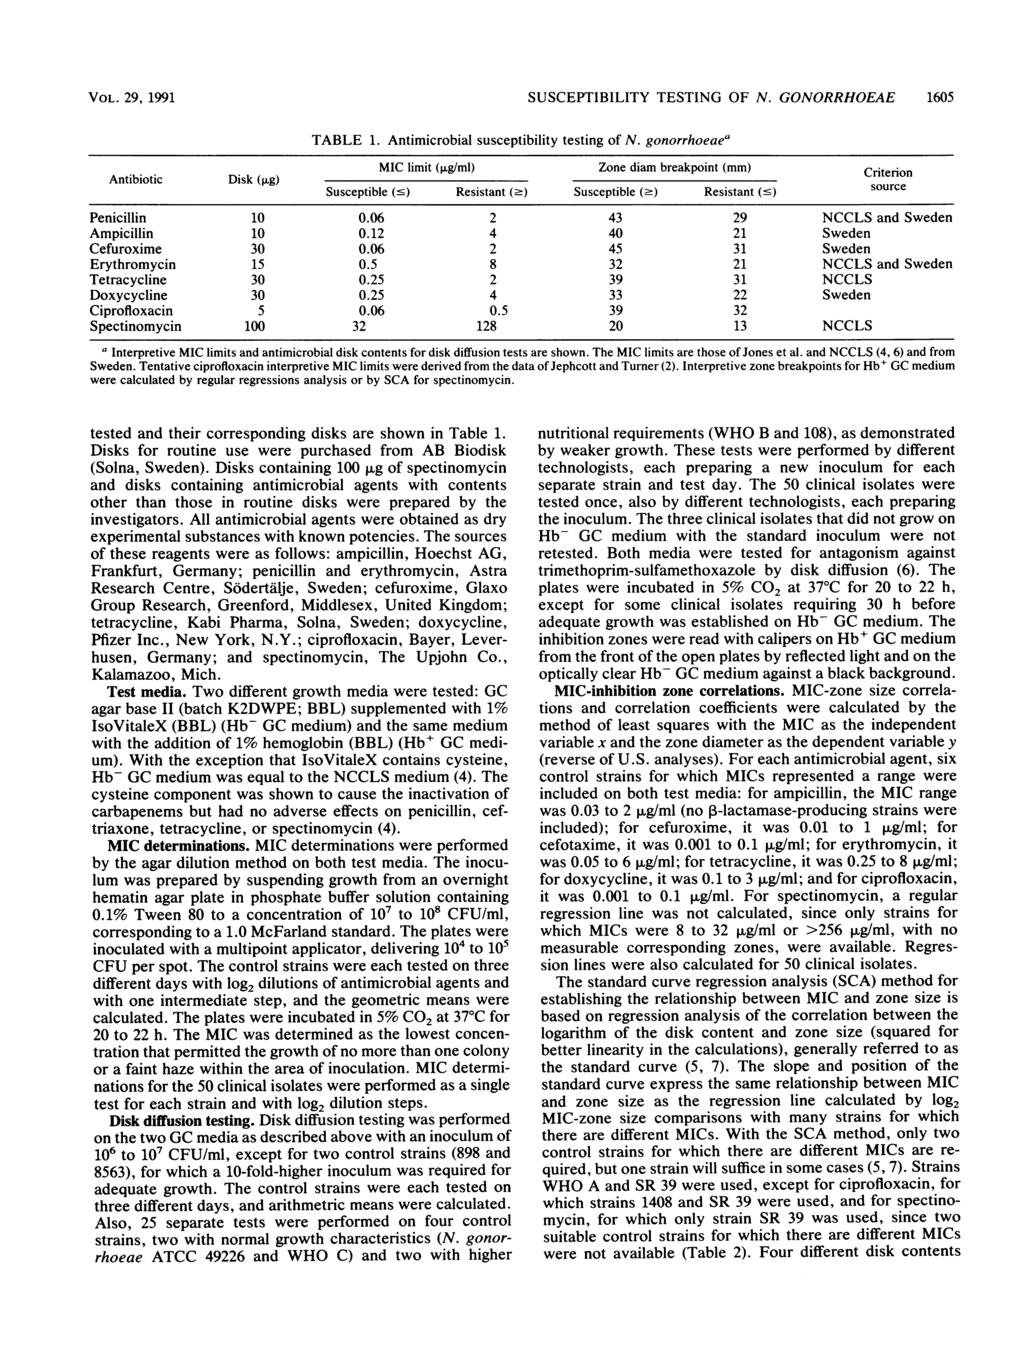 VOL. 29, 1991 SUSCEPTIBILITY TESTING OF N. GONORRHOEAE 1605 TABLE 1. Antimicrobial susceptibility testing of N. gonorrhoeaea Antibiotic Disk (,u.